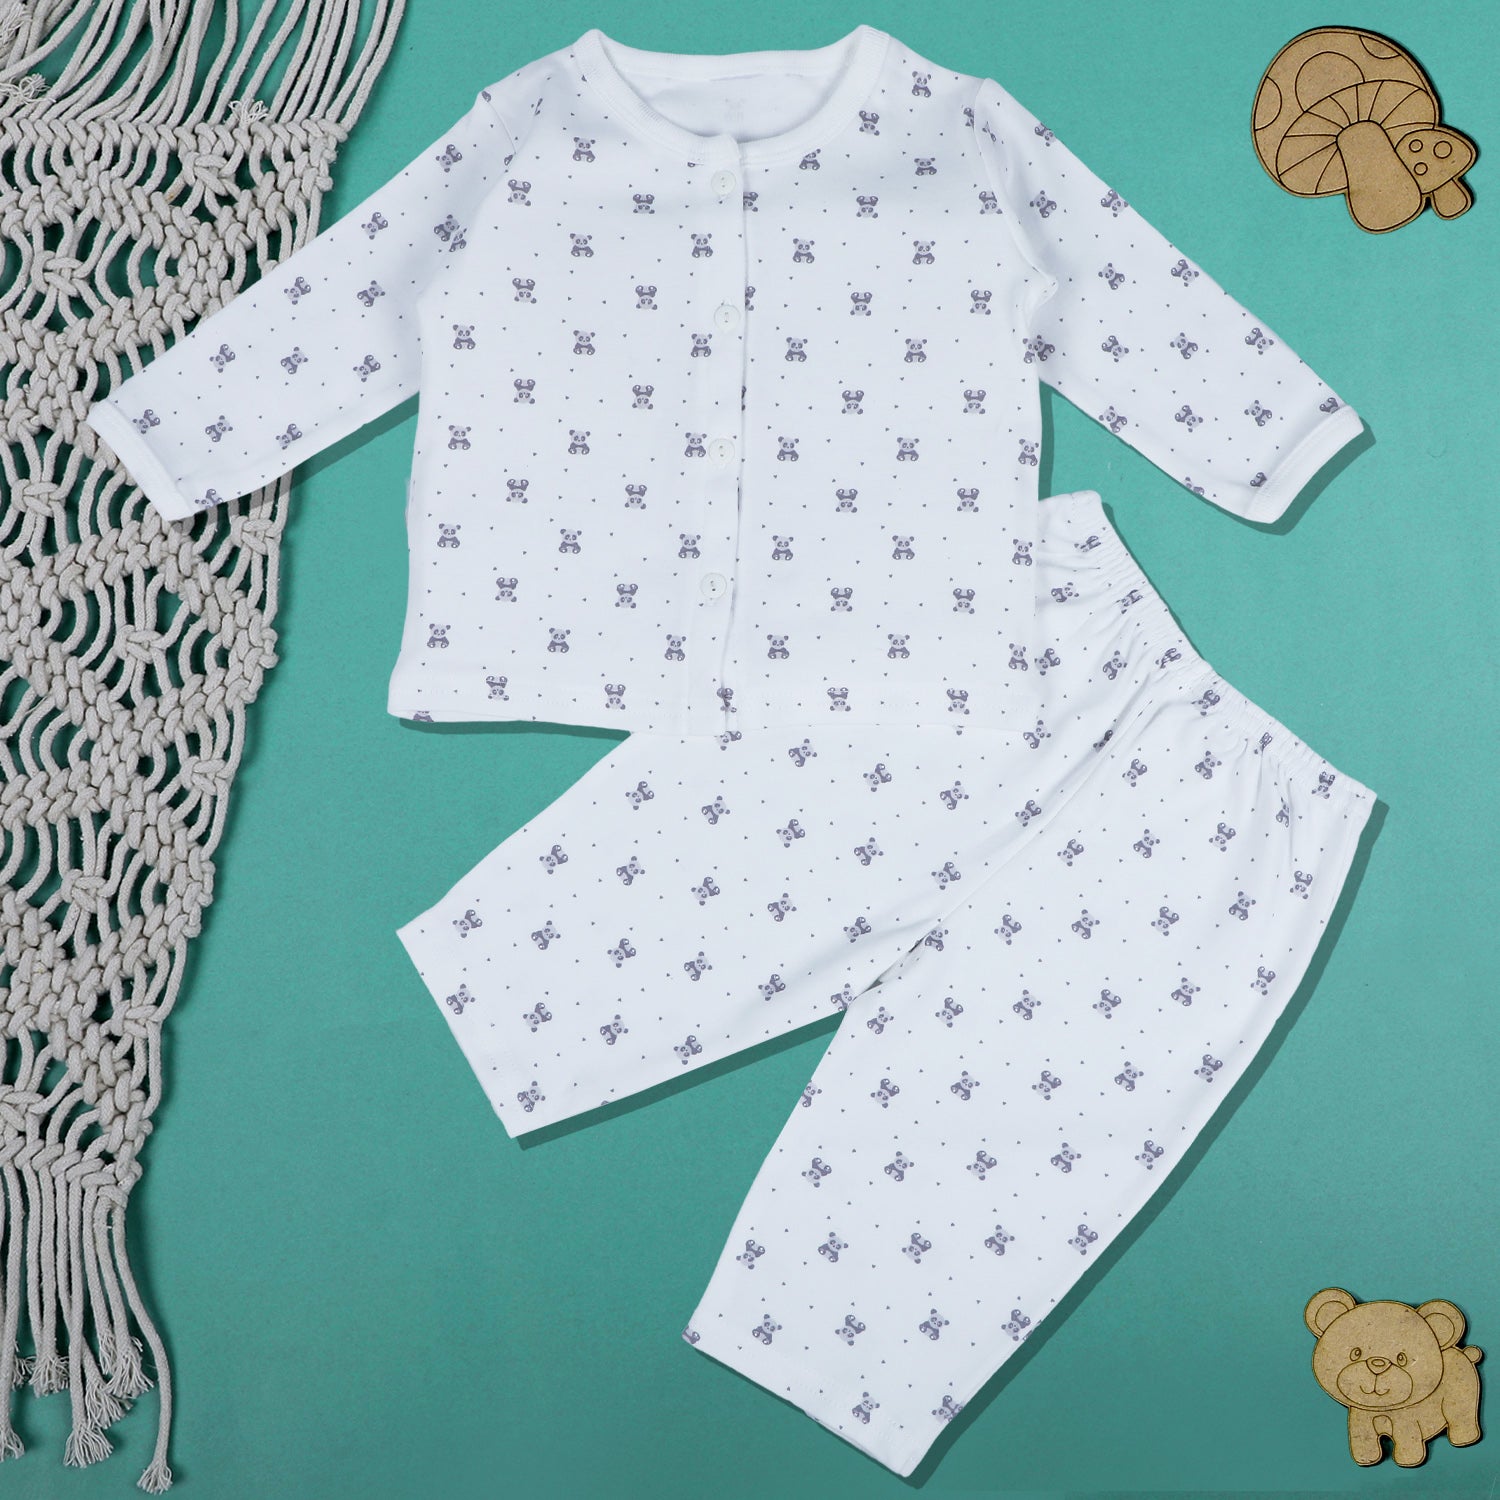 Baby Moo Panda Print Soft Cotton Full Sleeves Top And Pyjama 2pcs Night Suit - White - Baby Moo